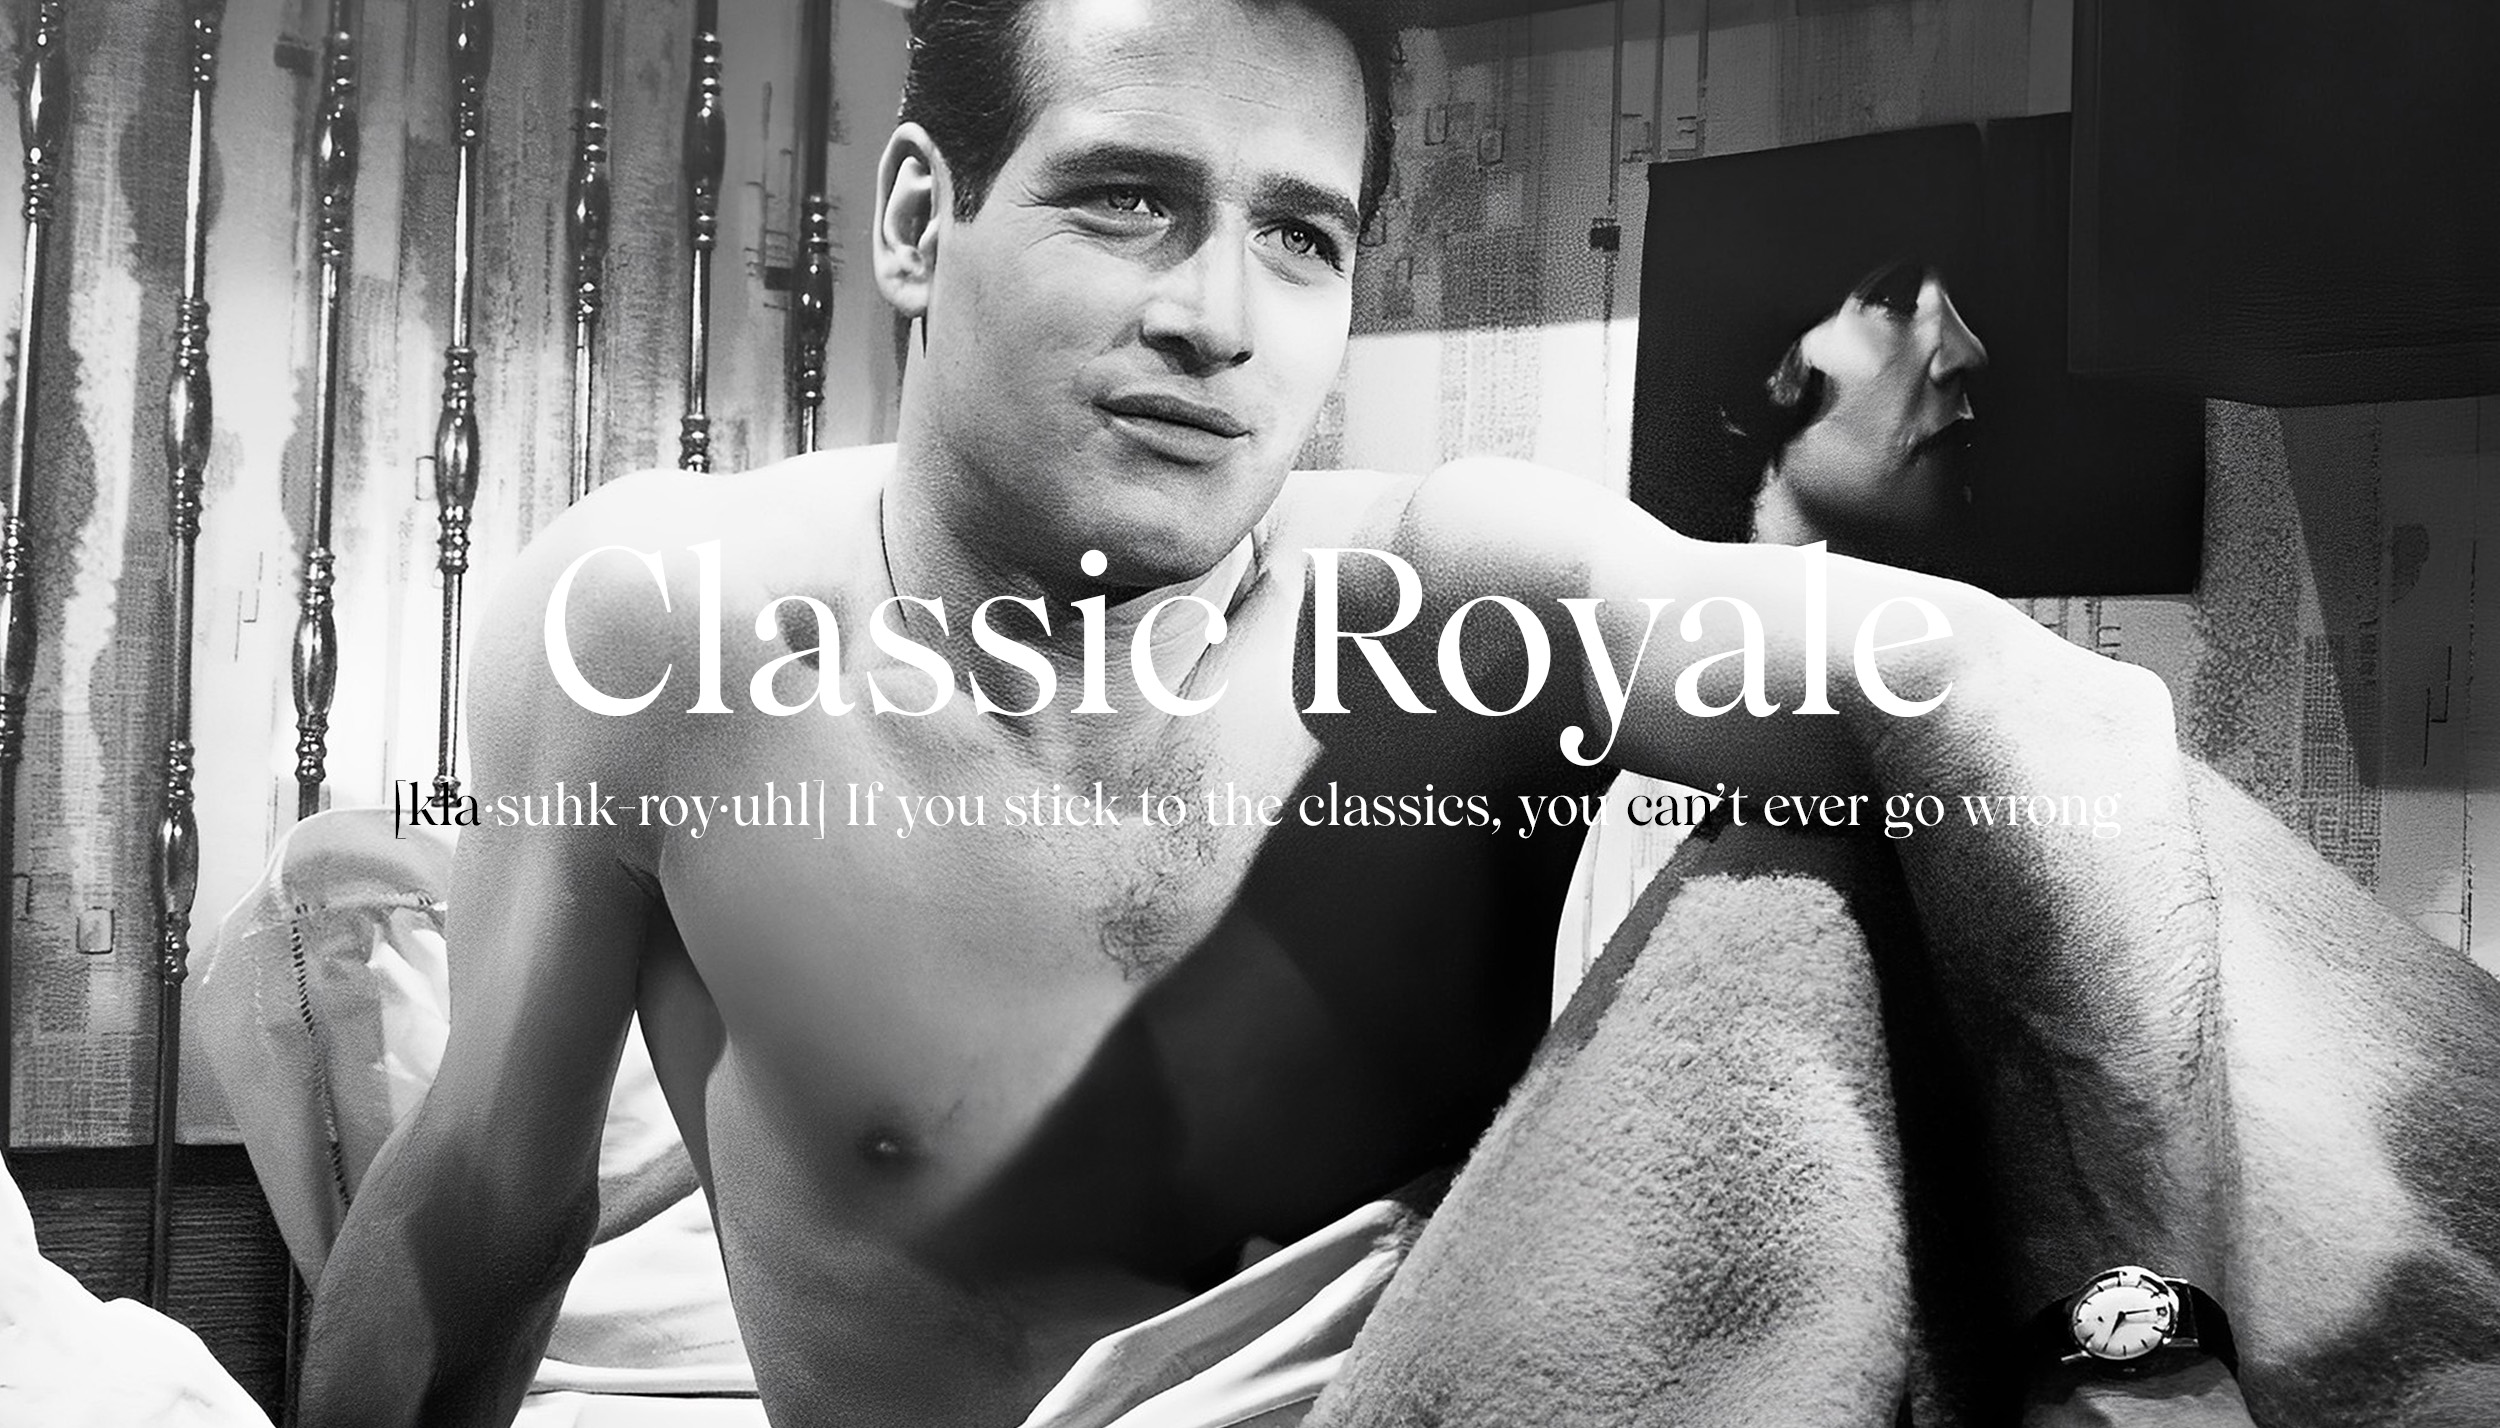 Classic Royale